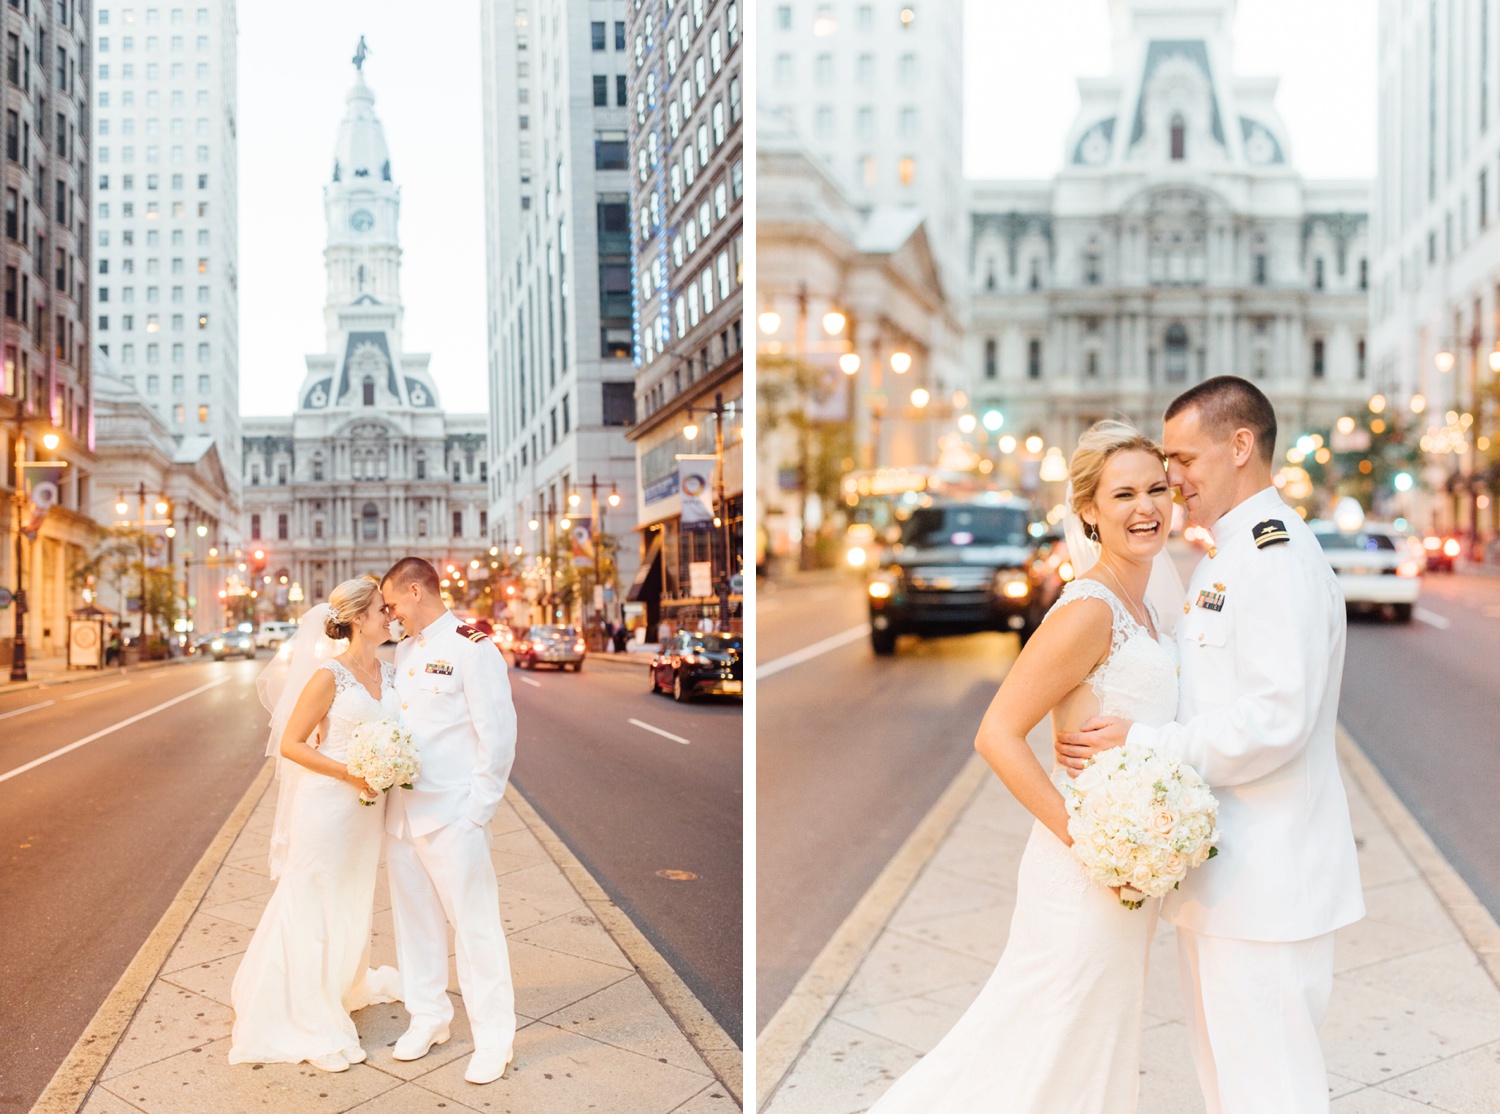 Molly + Shane - Crystal Tea Room Wedding - Philadelphia Wedding Photographer - Alison Dunn Photography photo